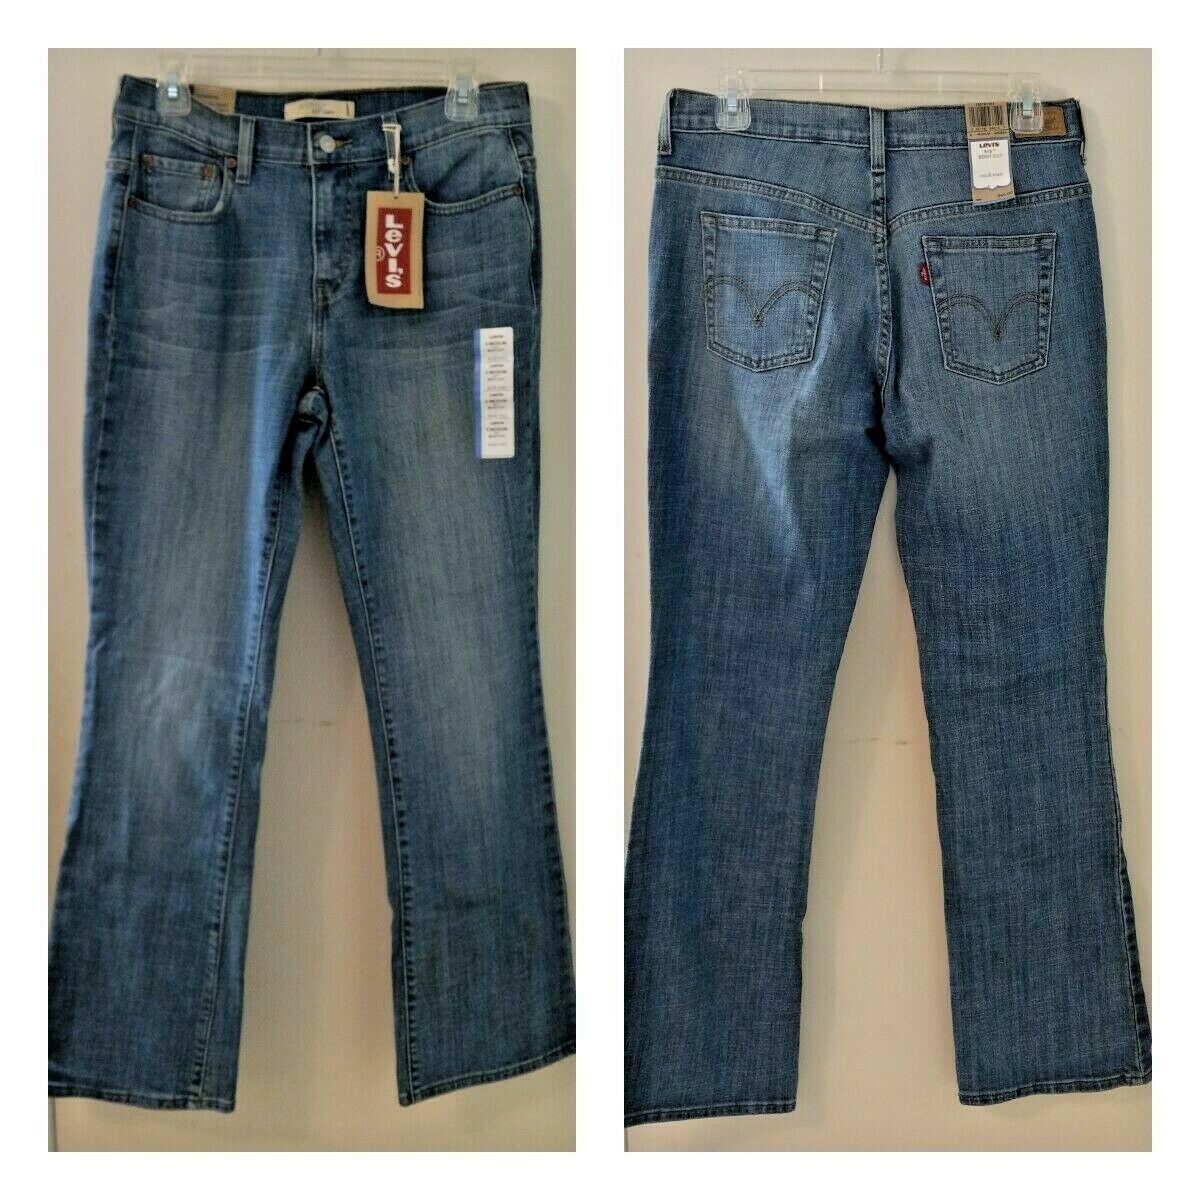 Levi's - Women's levis jeans 515 boot cut size 6 med.  misses mid rise med wash denim nwt